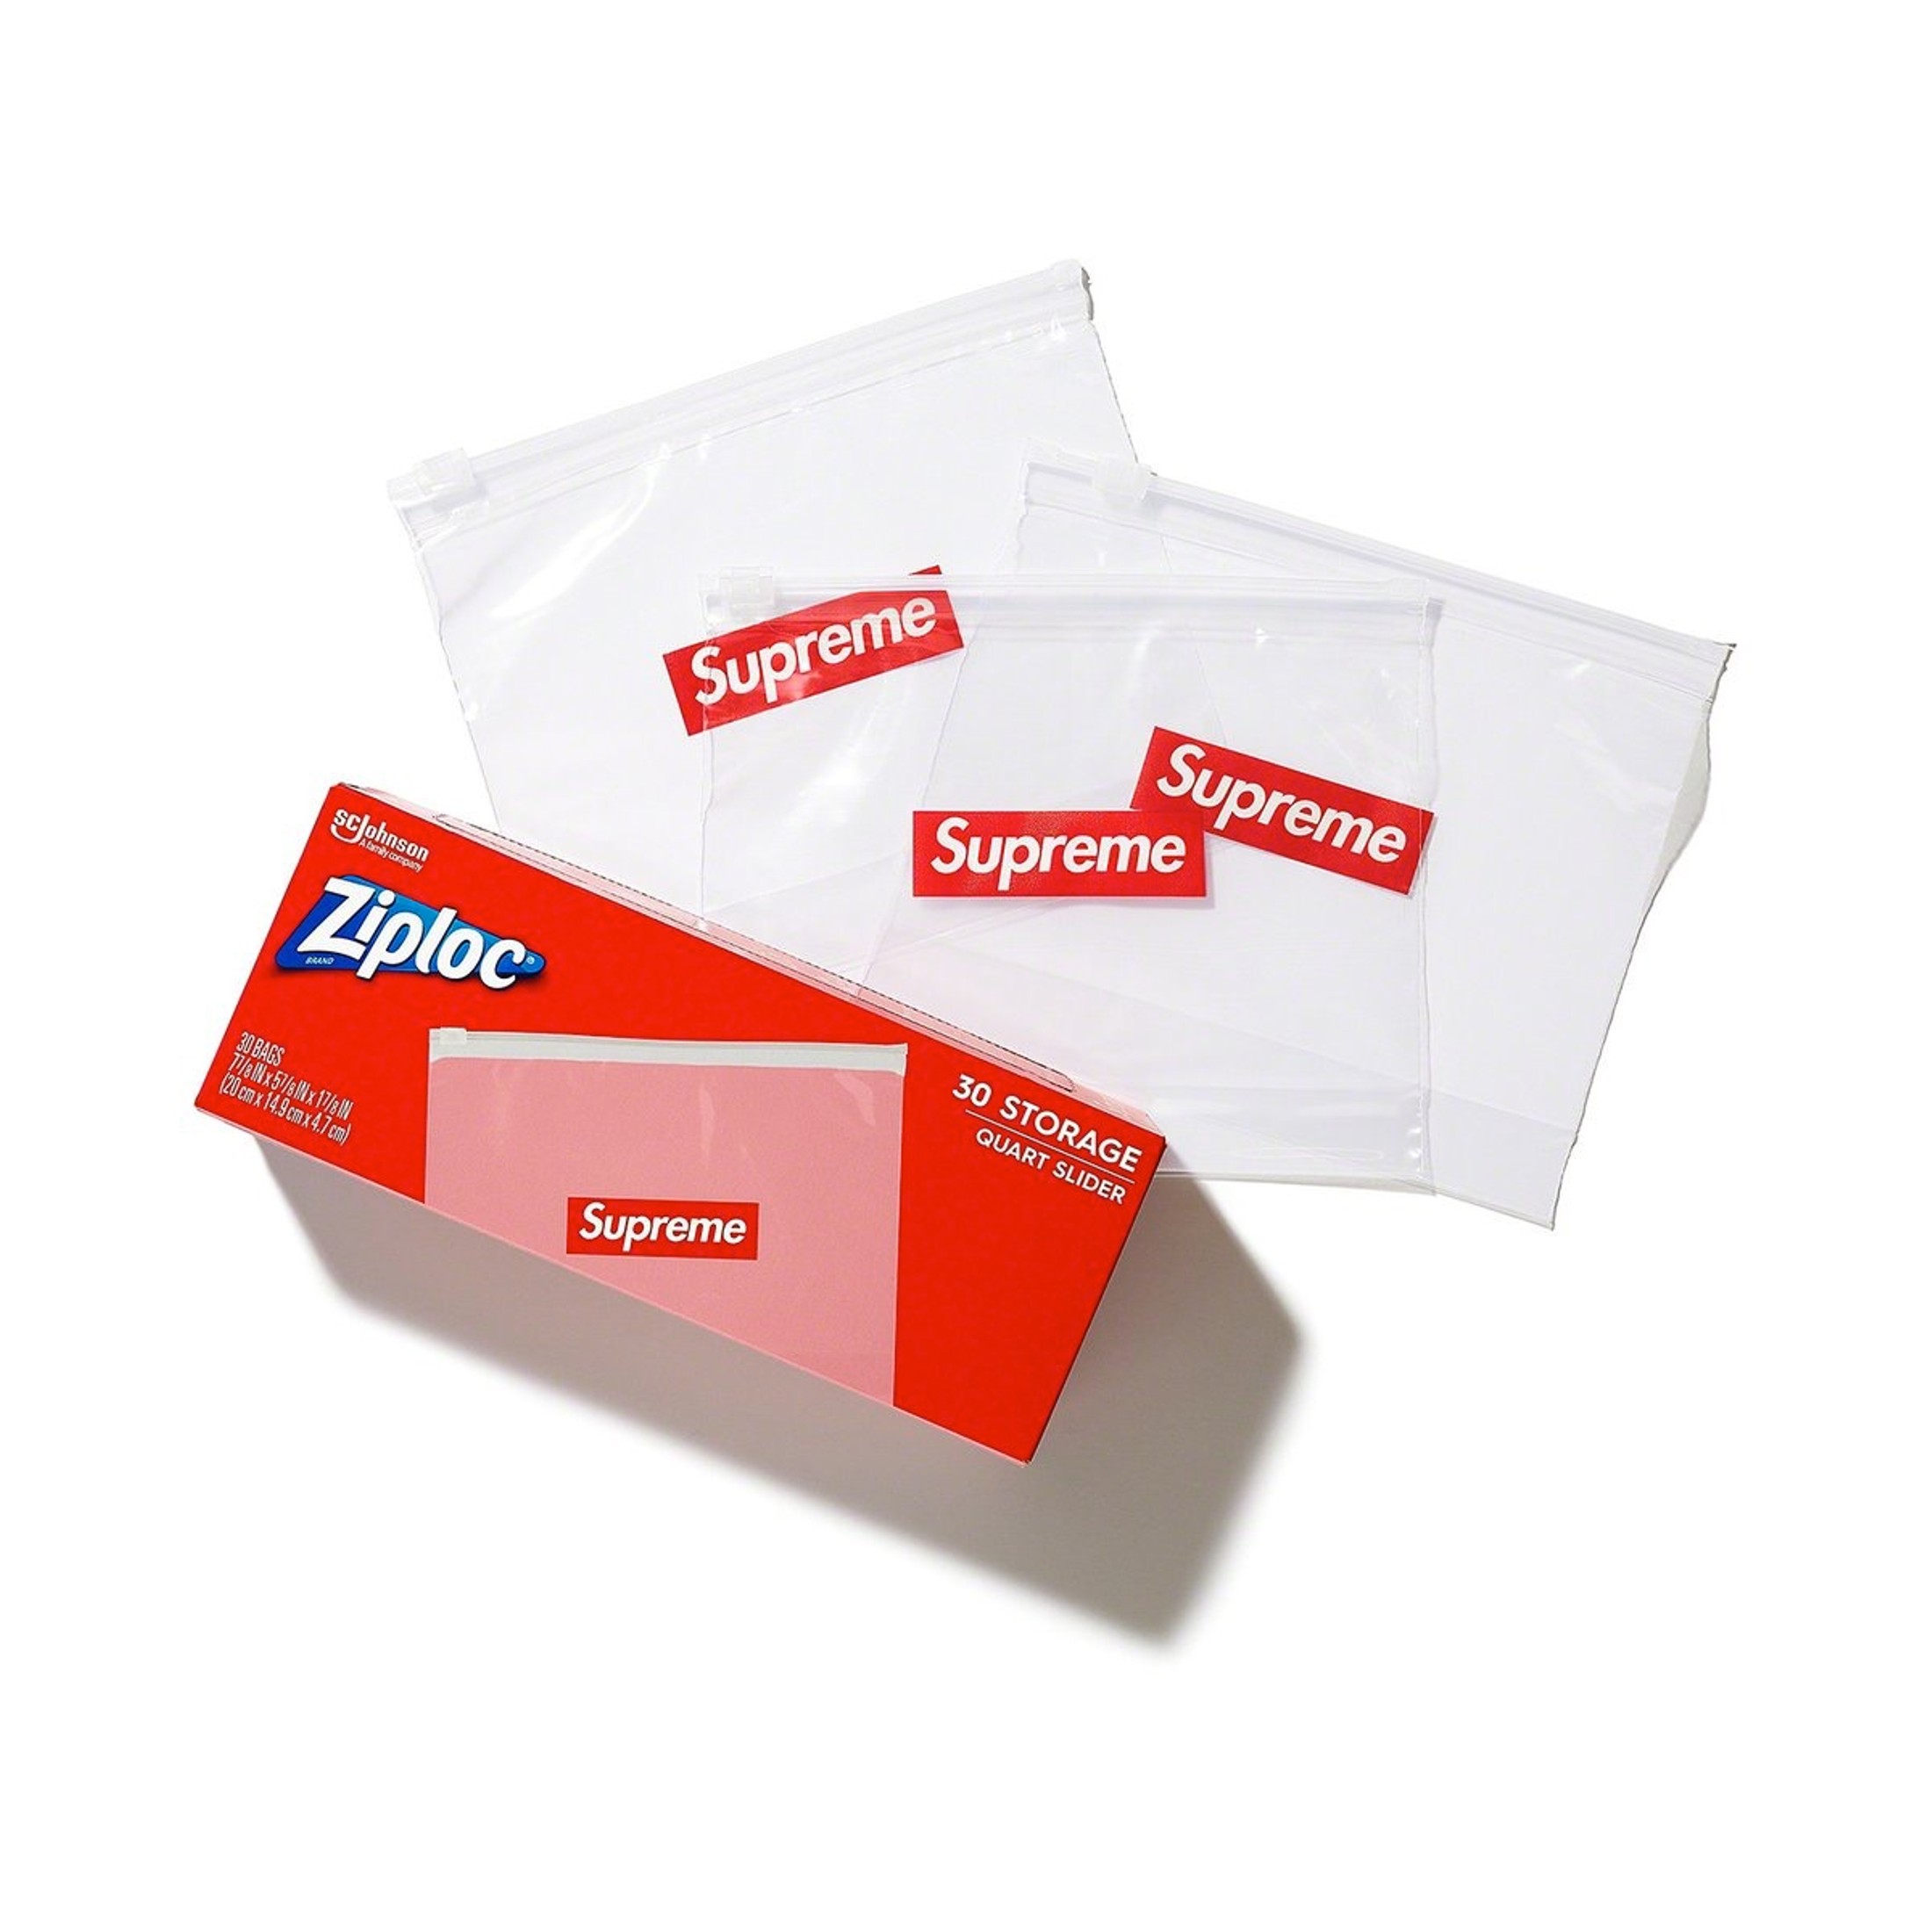 Supreme®/Ziploc® Bags (Box of 30) - Clear